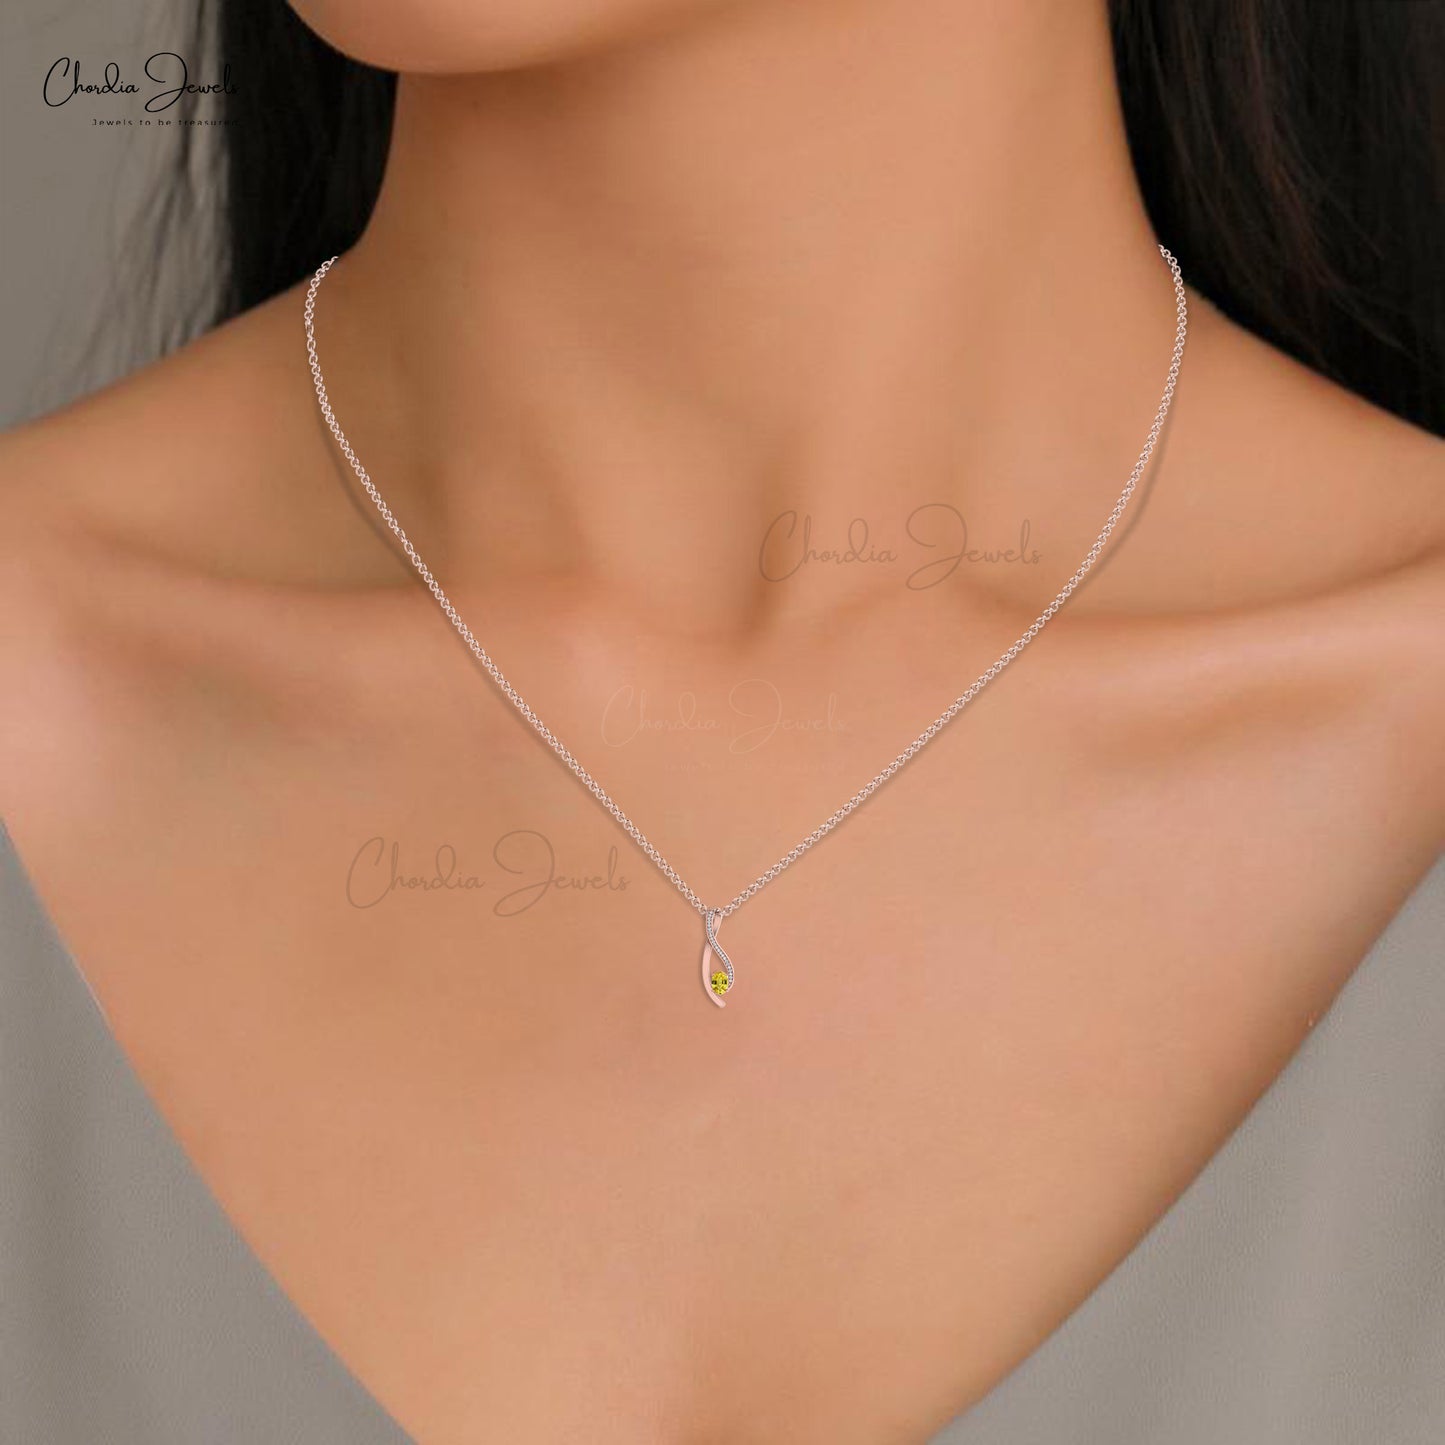 Unique Design Natural Yellow Sapphire Gemstone Ovarlay Pendant Necklace Round Cut White Diamond Pendant in 14k Pure Gold Bridesmaid Gift